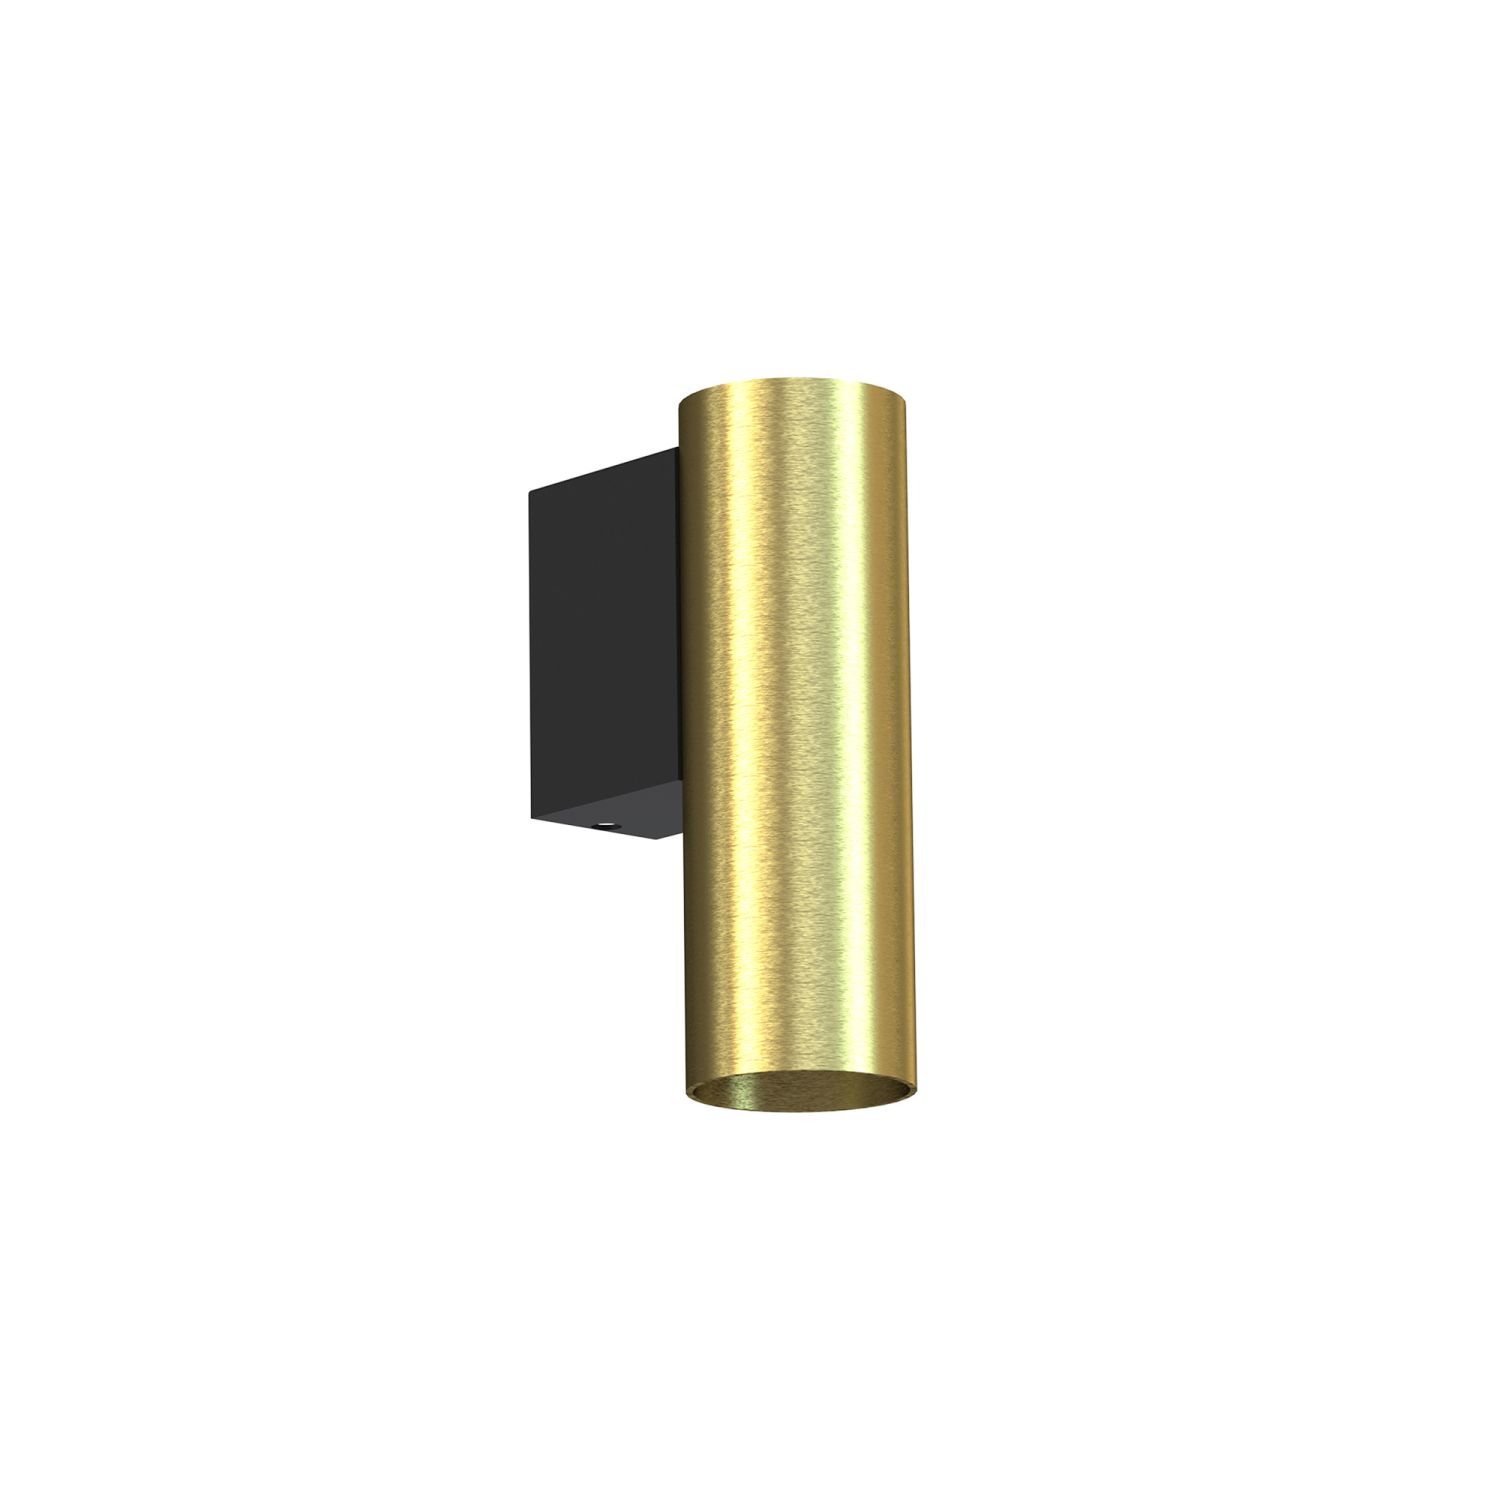 Wandlampe Messing Schwarz GU10 R35 H: 12 cm Metall Modern